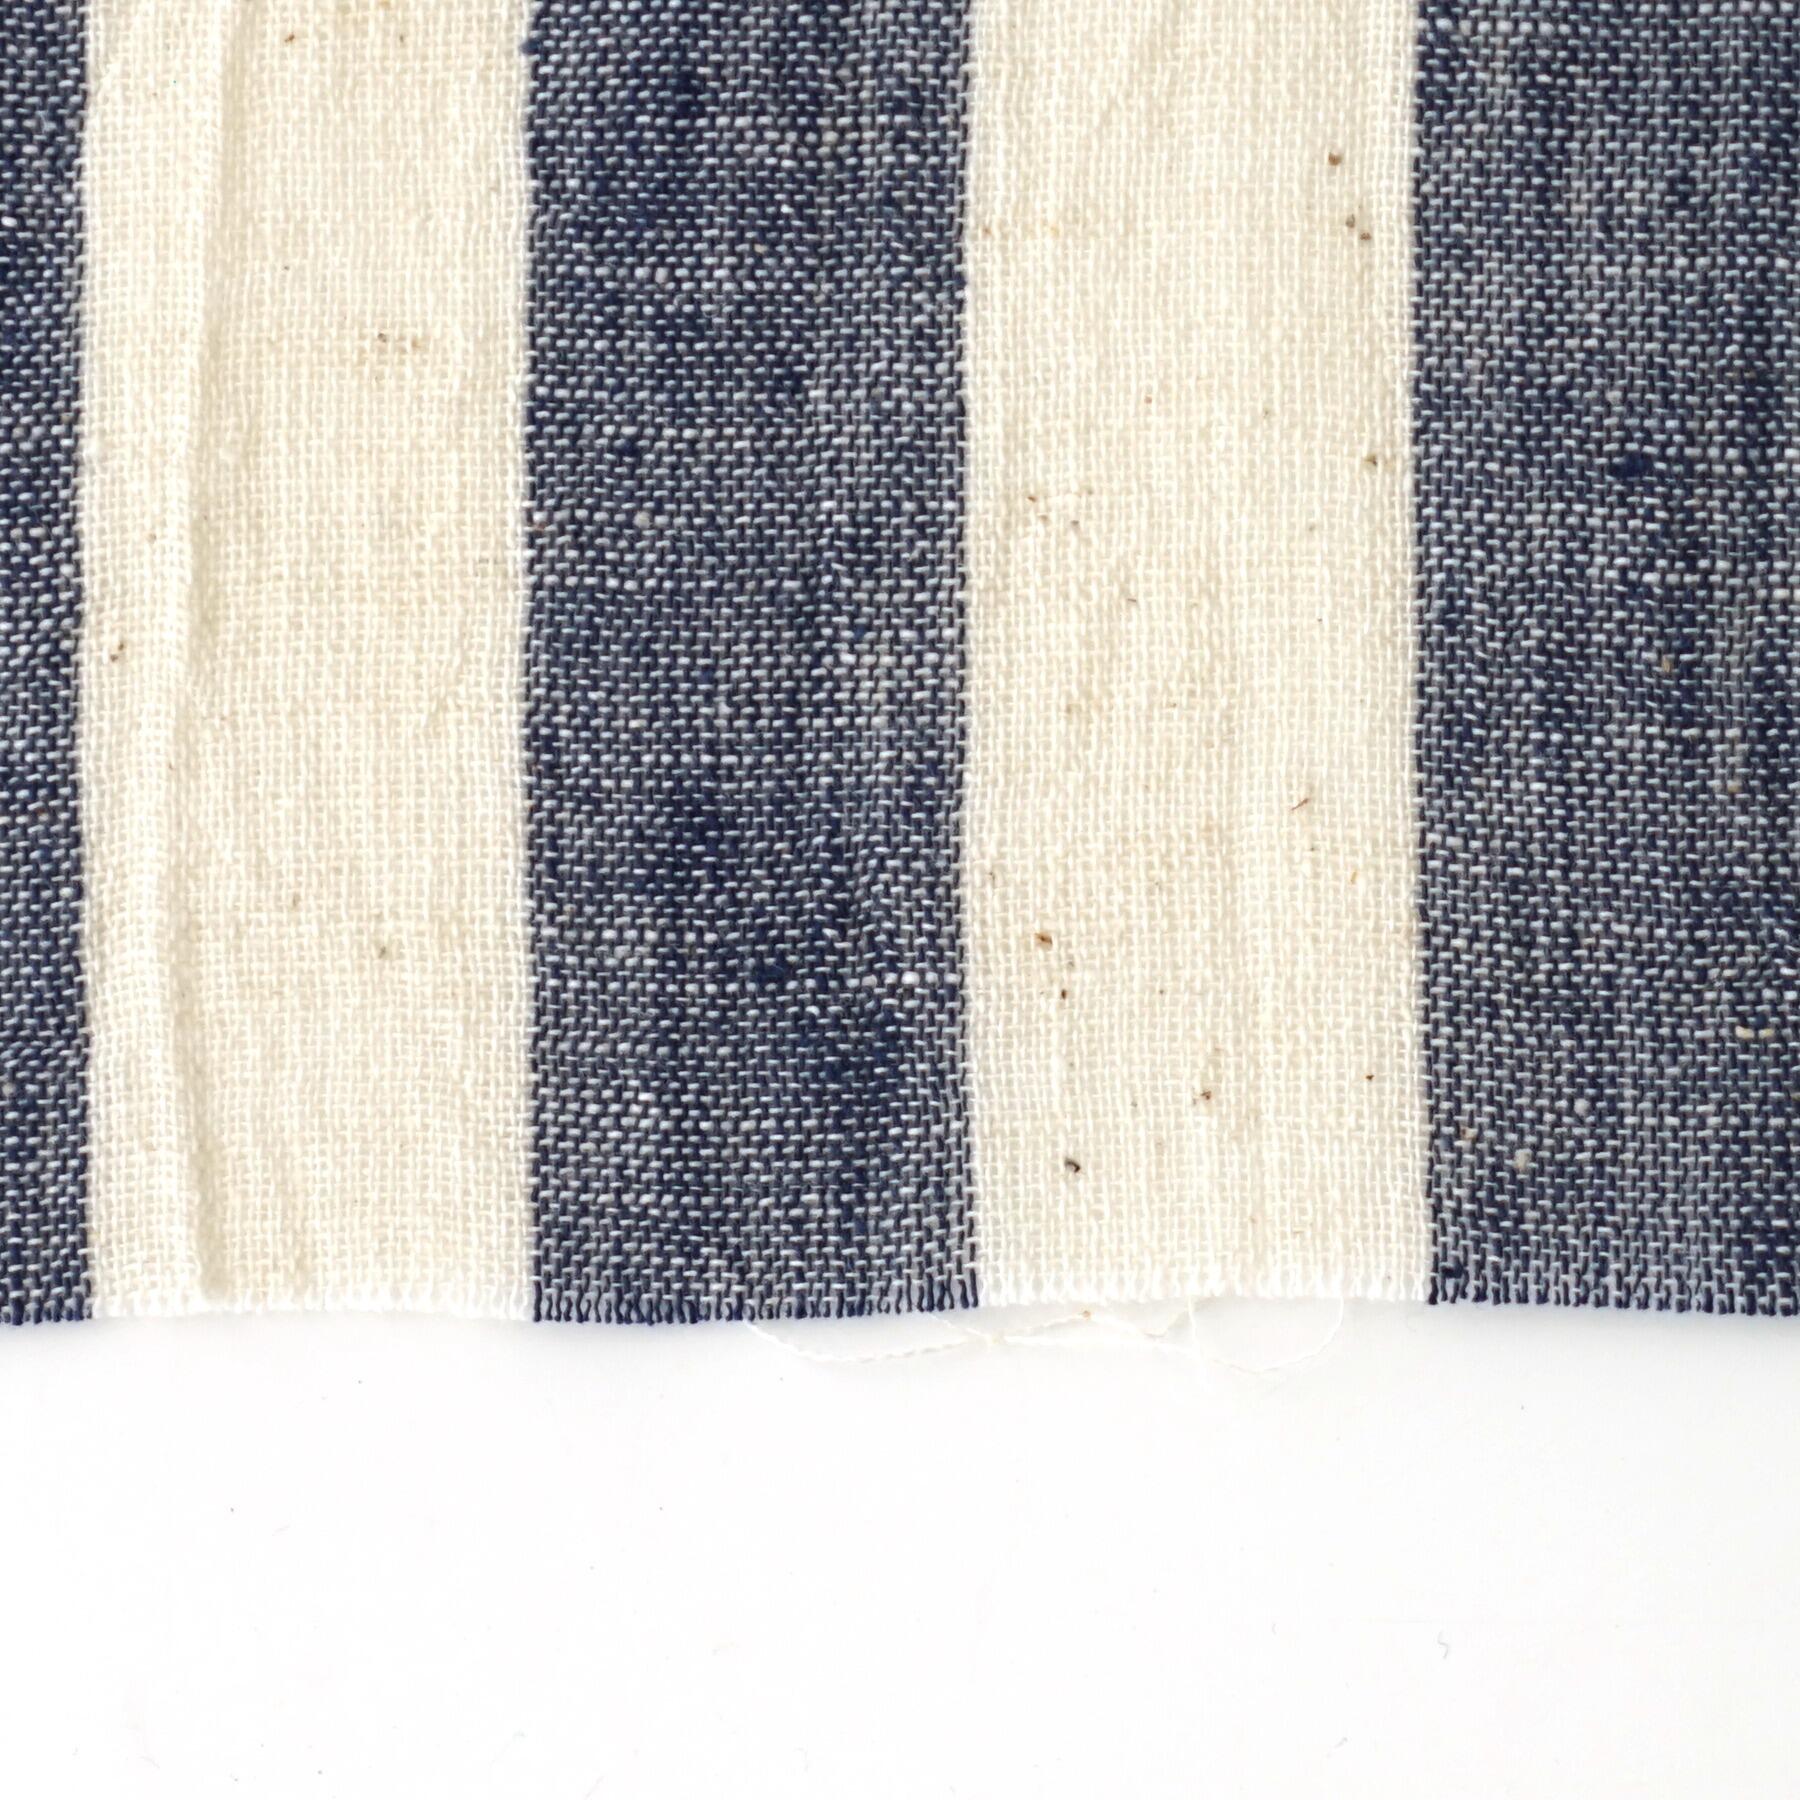 KJC03 - Organic Kala Cotton - Handloom Woven - Plain Weave - 1 by 1 - Stripes - Blue Yarn Dye - Close Up